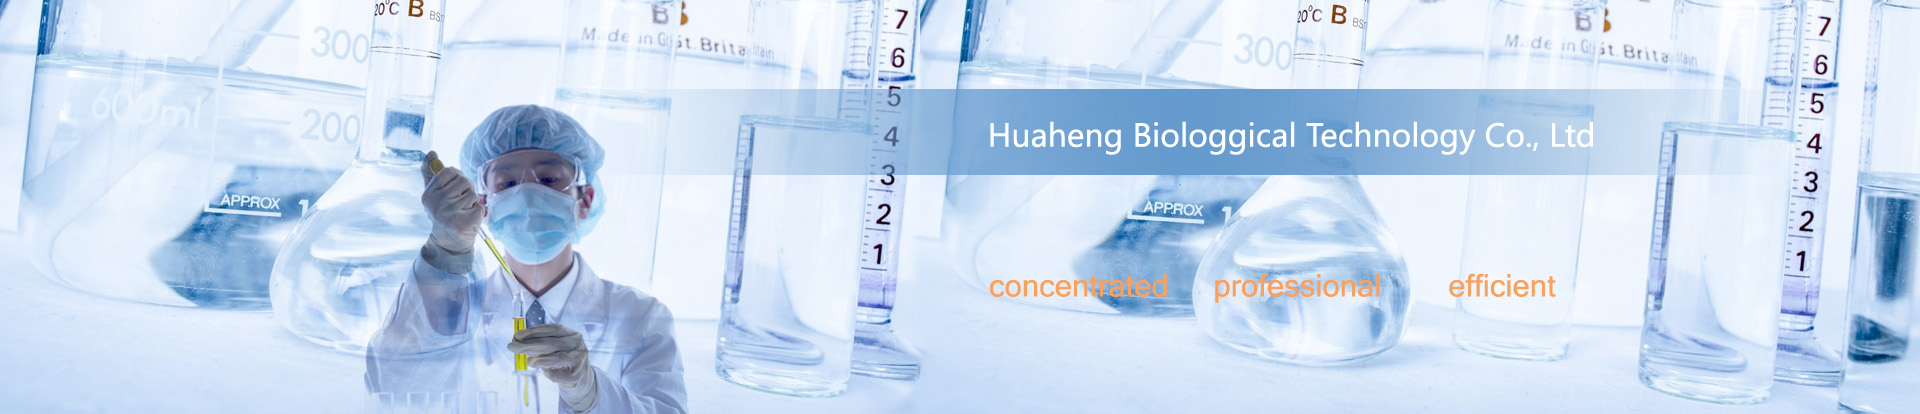 Hebei Huaheng Biological Technology Co., Ltd